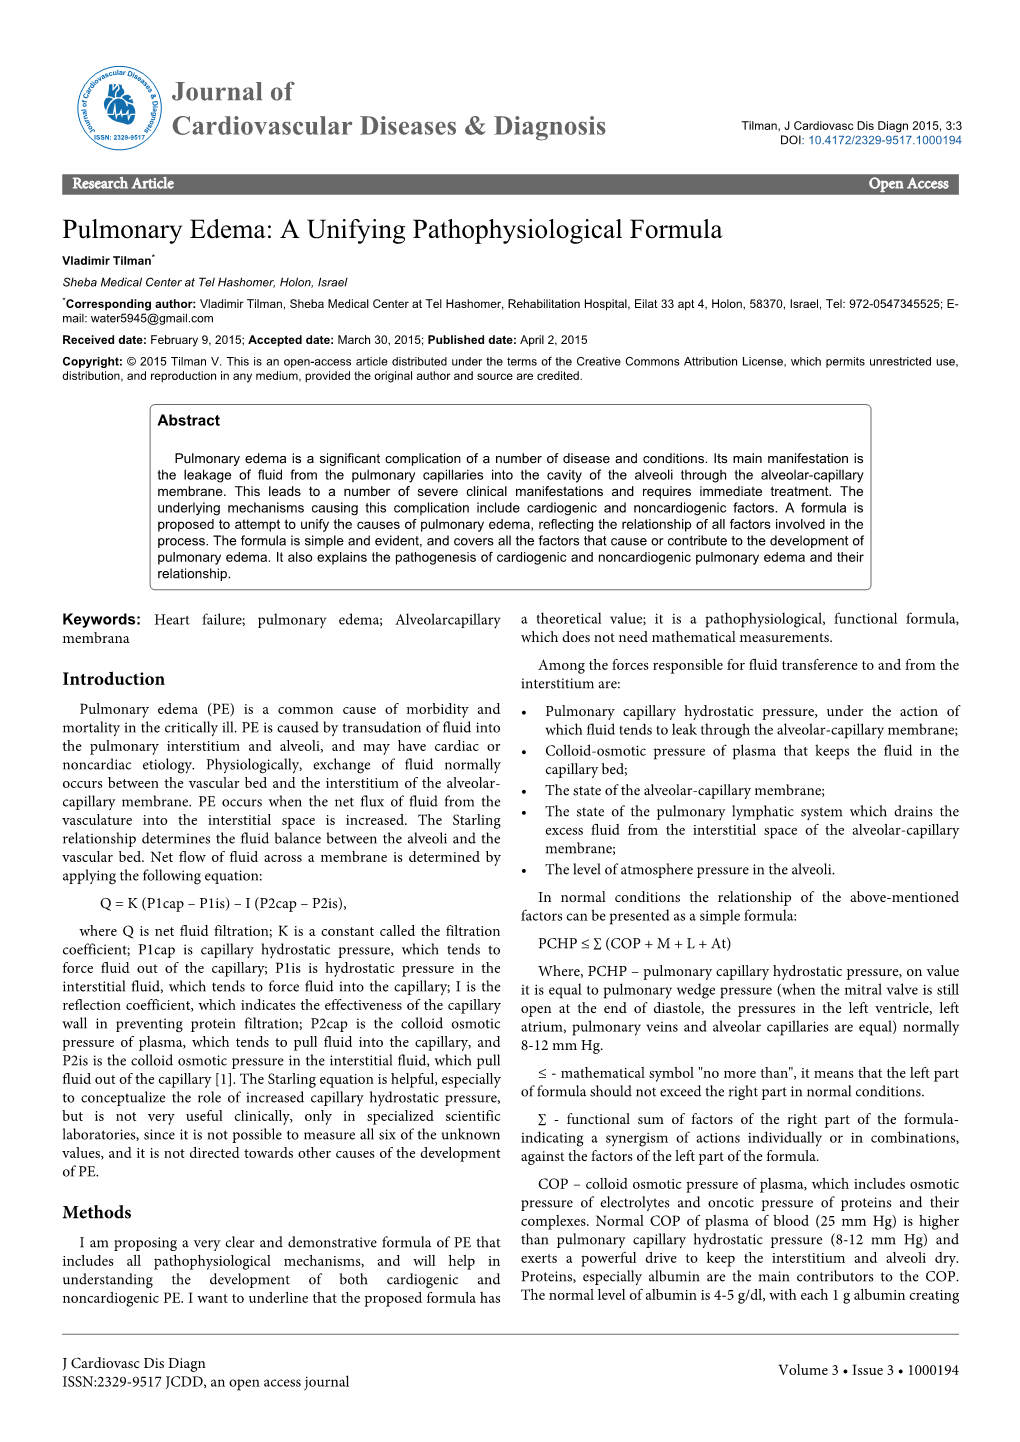 Pulmonary Edema: a Unifying Pathophysiological Formula